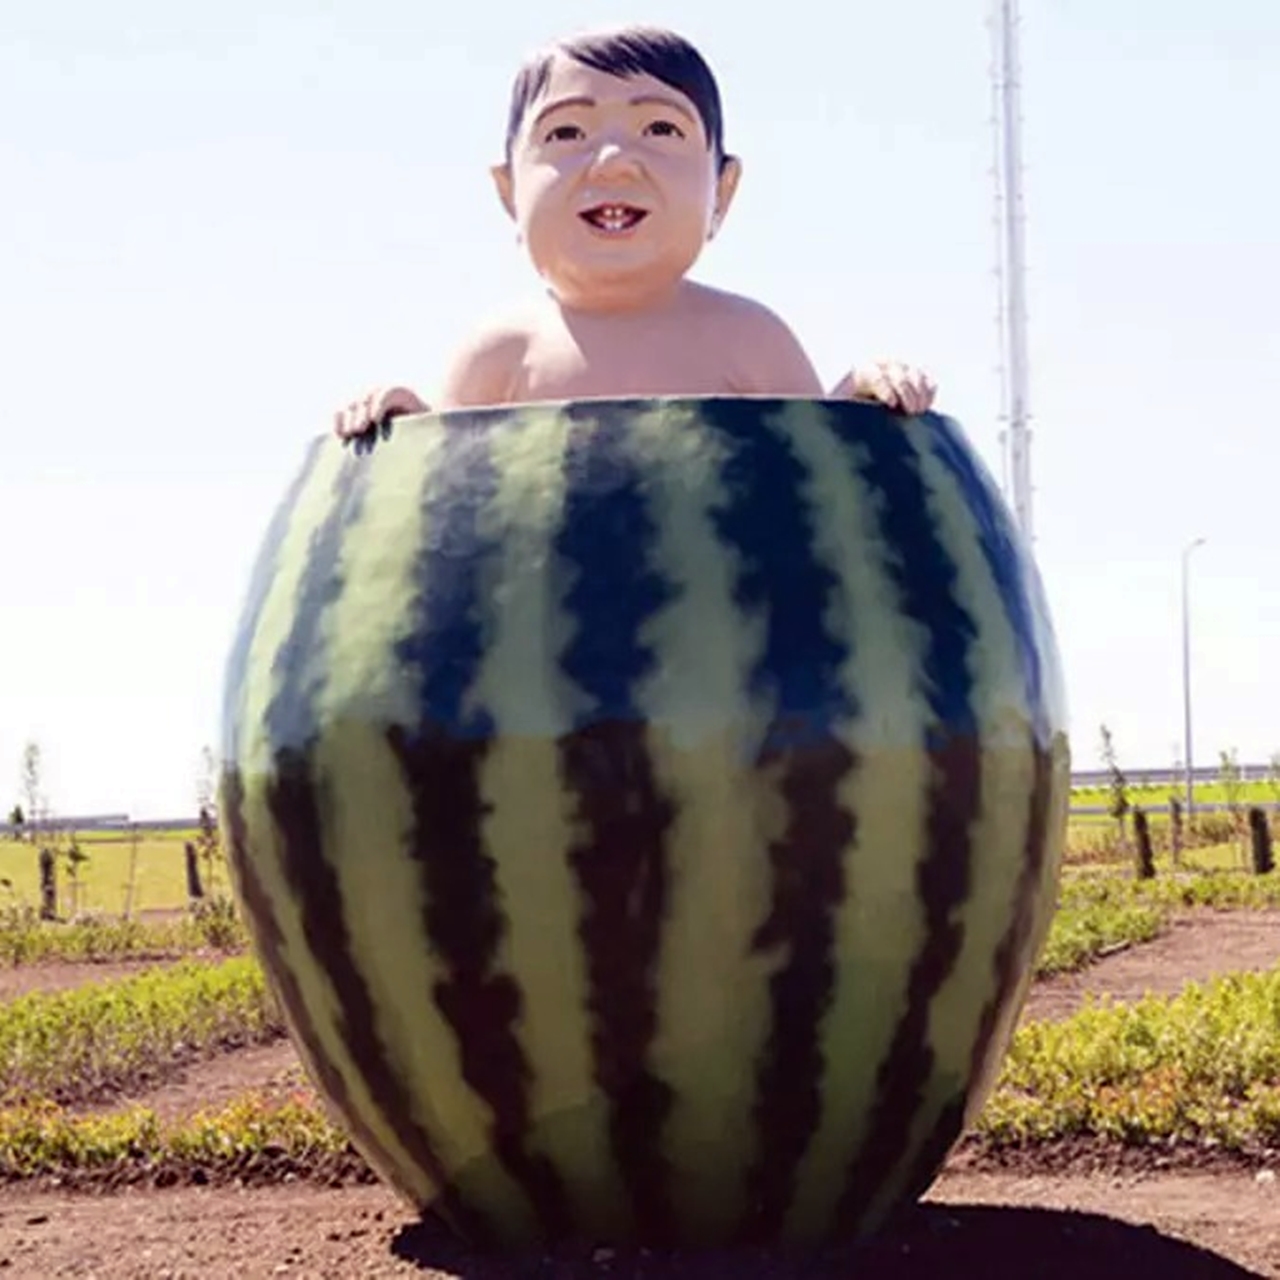 watermelon boy statue